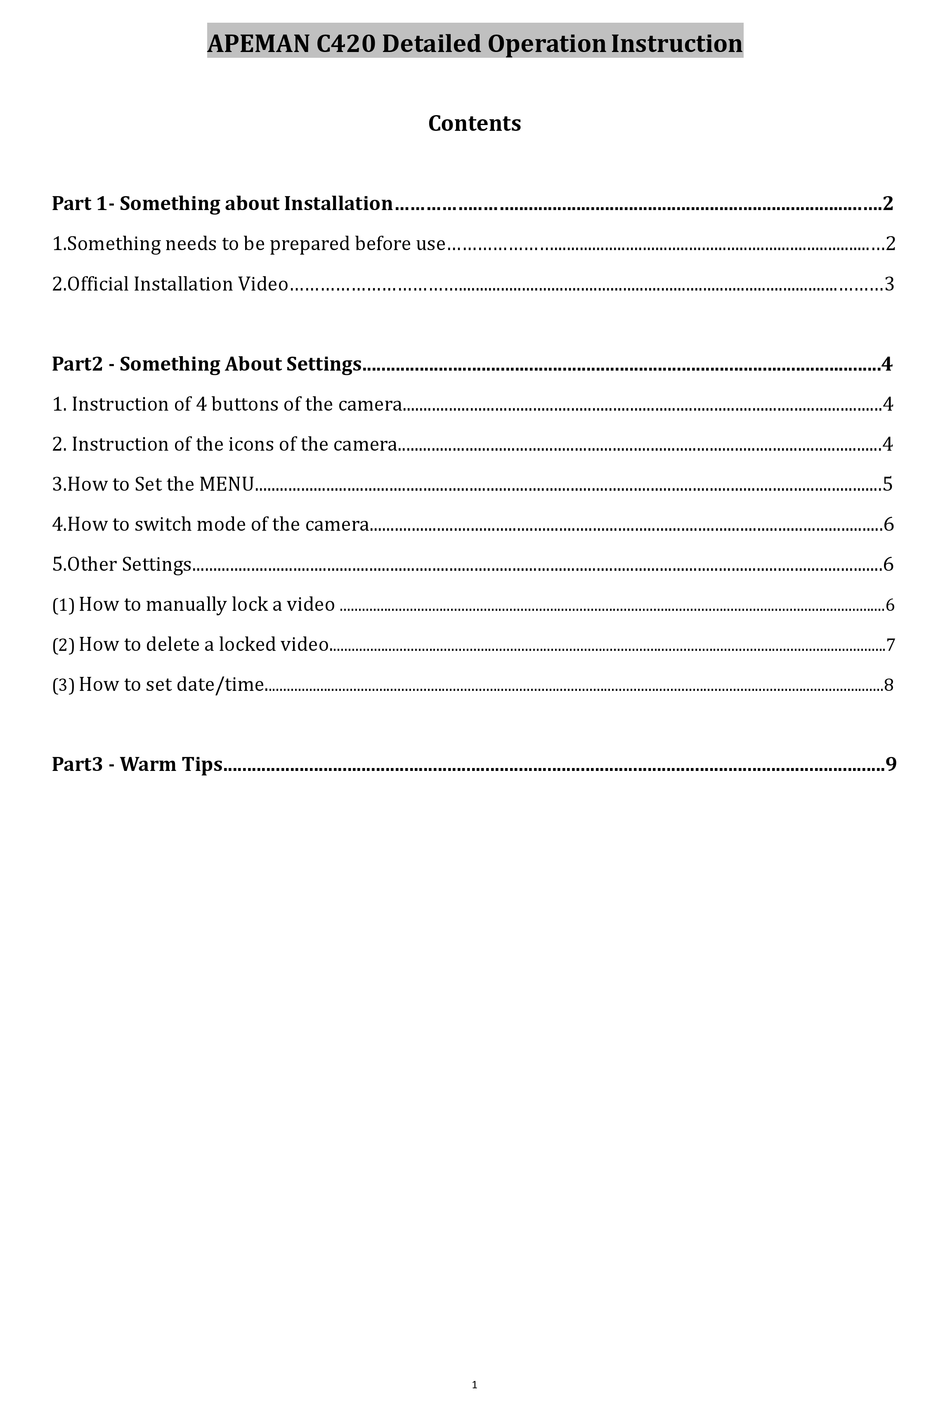 APEMAN C420 DETAILED OPERATION INSTRUCTION Pdf Download | ManualsLib